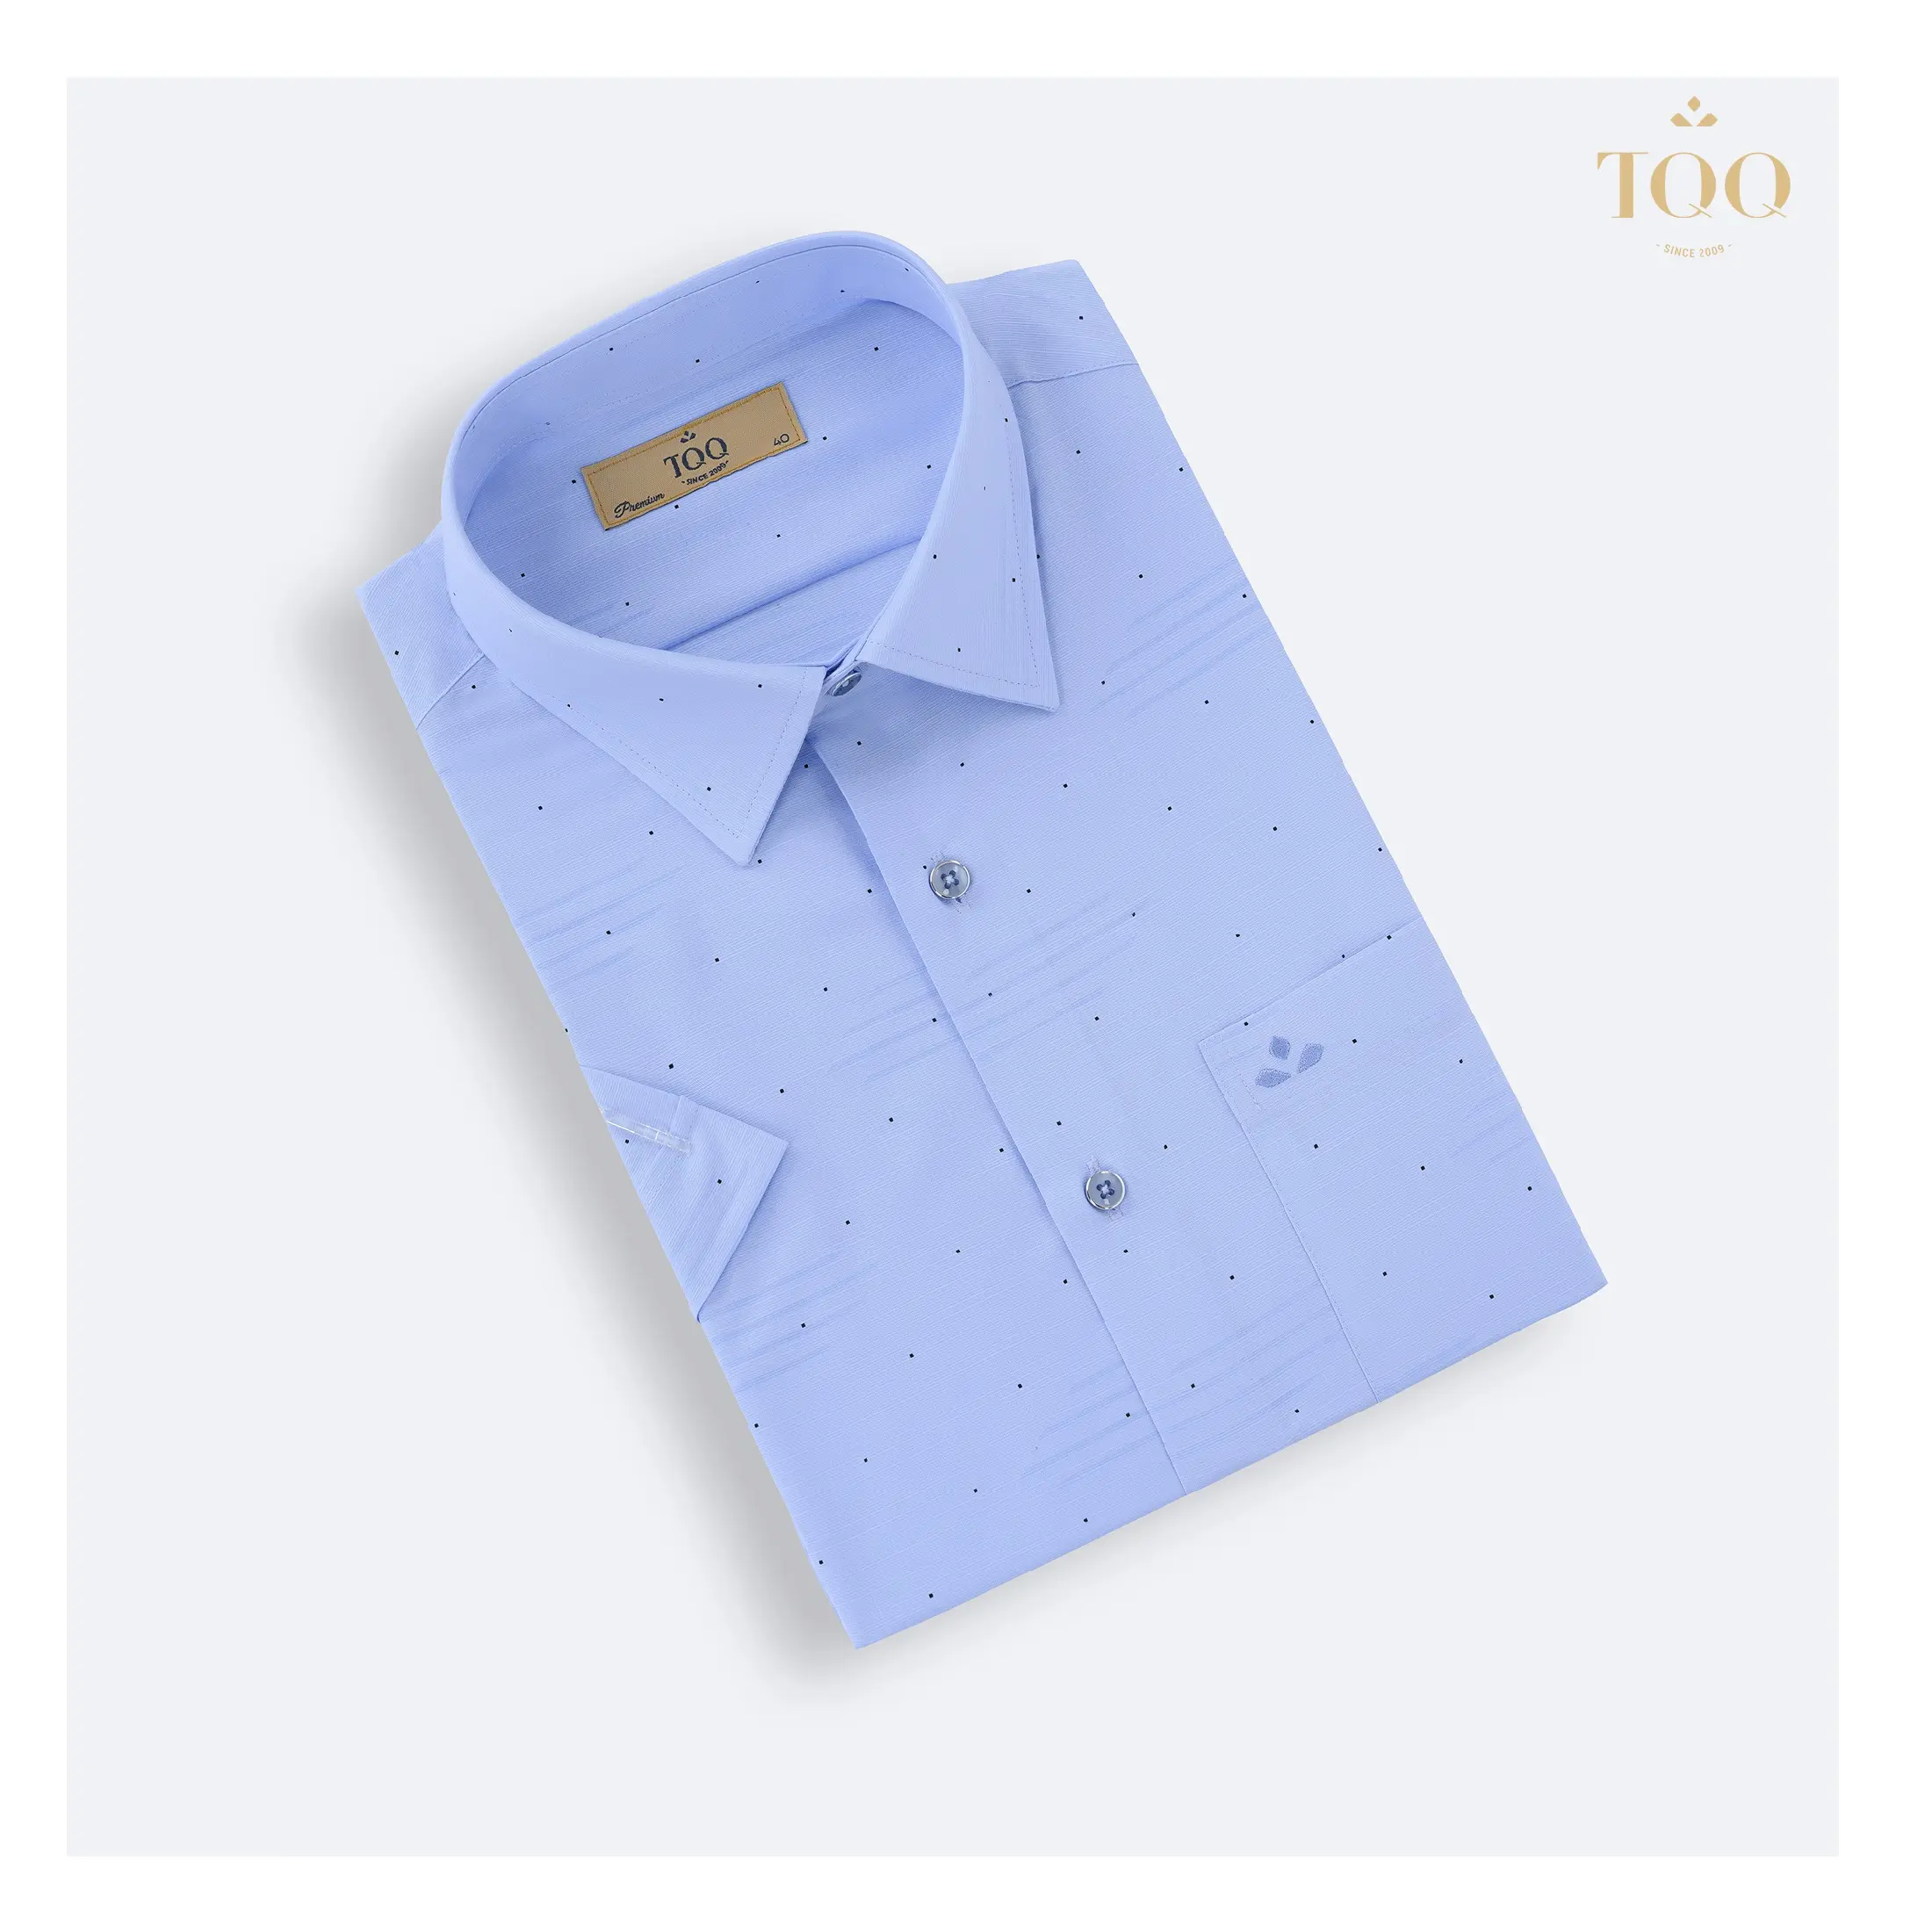 Polyester Formal work shirt Polka Dot Short Sleeve Dress Shirt in Light Blue from Vietnam Anti-wrinkle Made In Vietnam